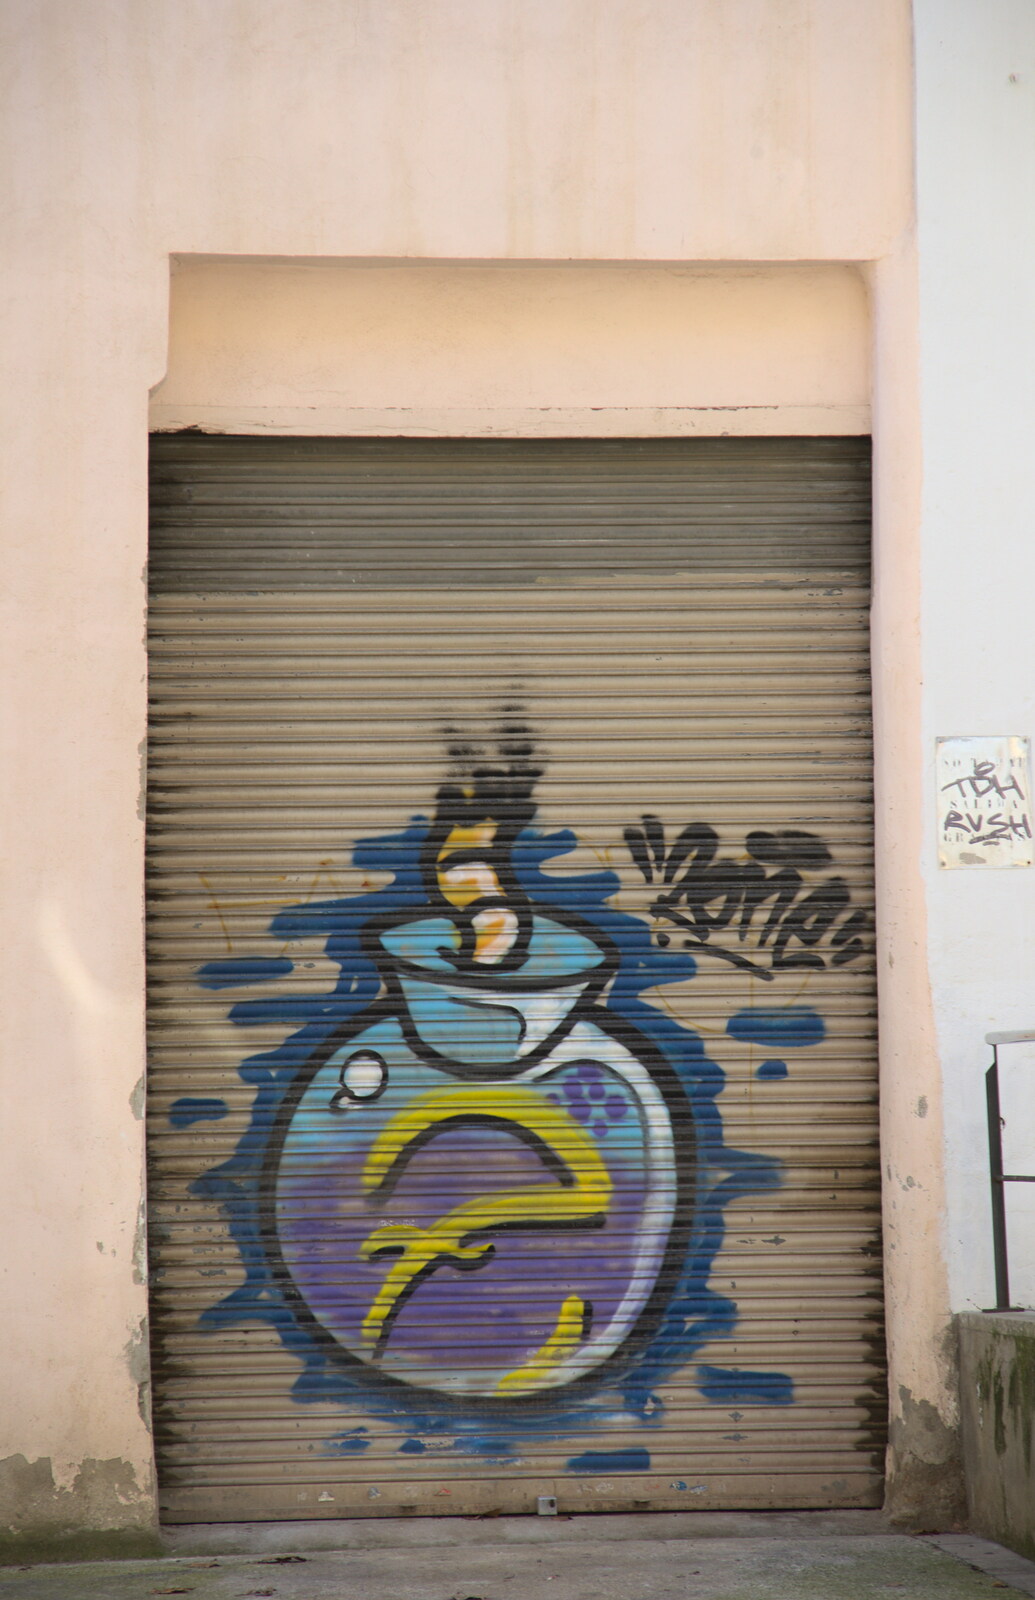 Graffiti on a shutter door from Barcelona and Parc Montjuïc, Catalonia, Spain - 21st October 2017